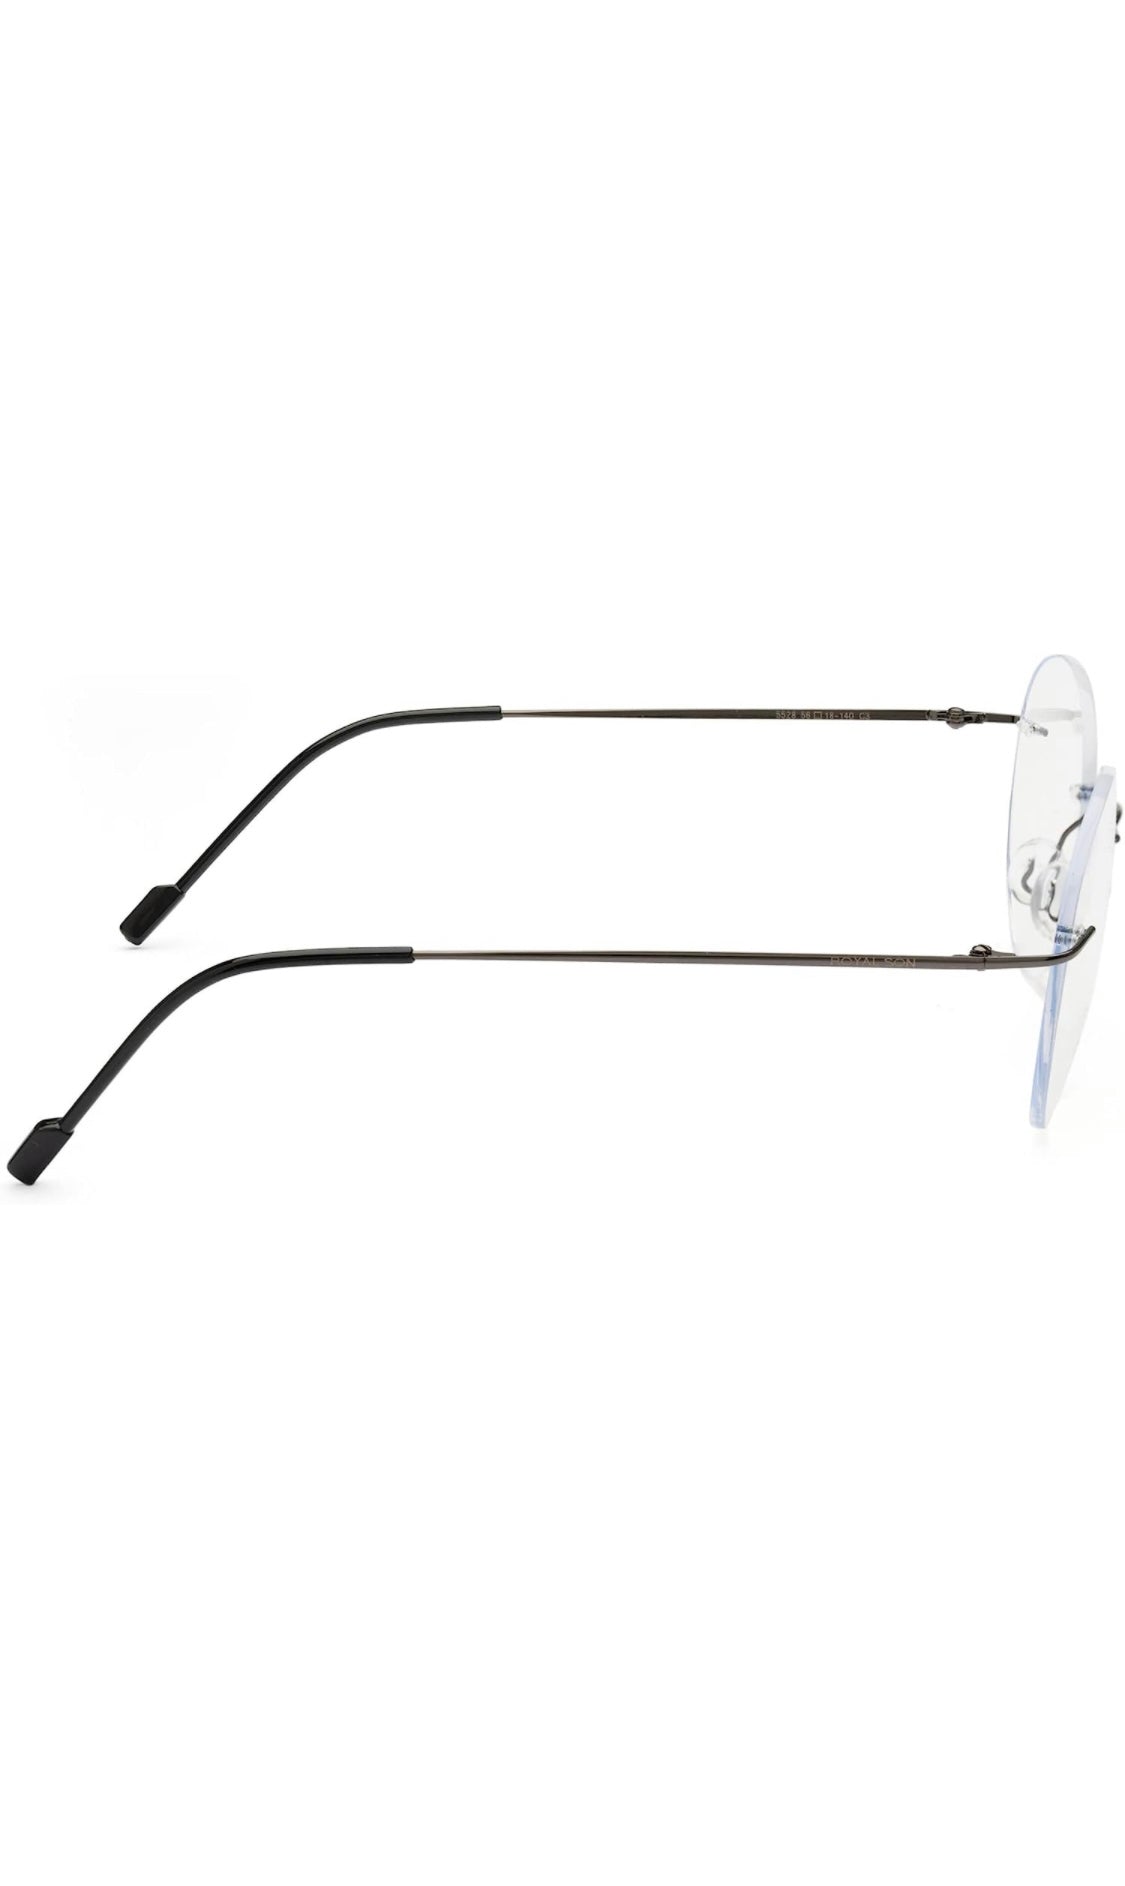 Jodykoes® Rimless Round Frame Zero Power Anti Glare Spectacle For Men and Women | Unisex Computer Eyeglasses Light Weight Round Frameless Eyewear (Black) - Jodykoes ®